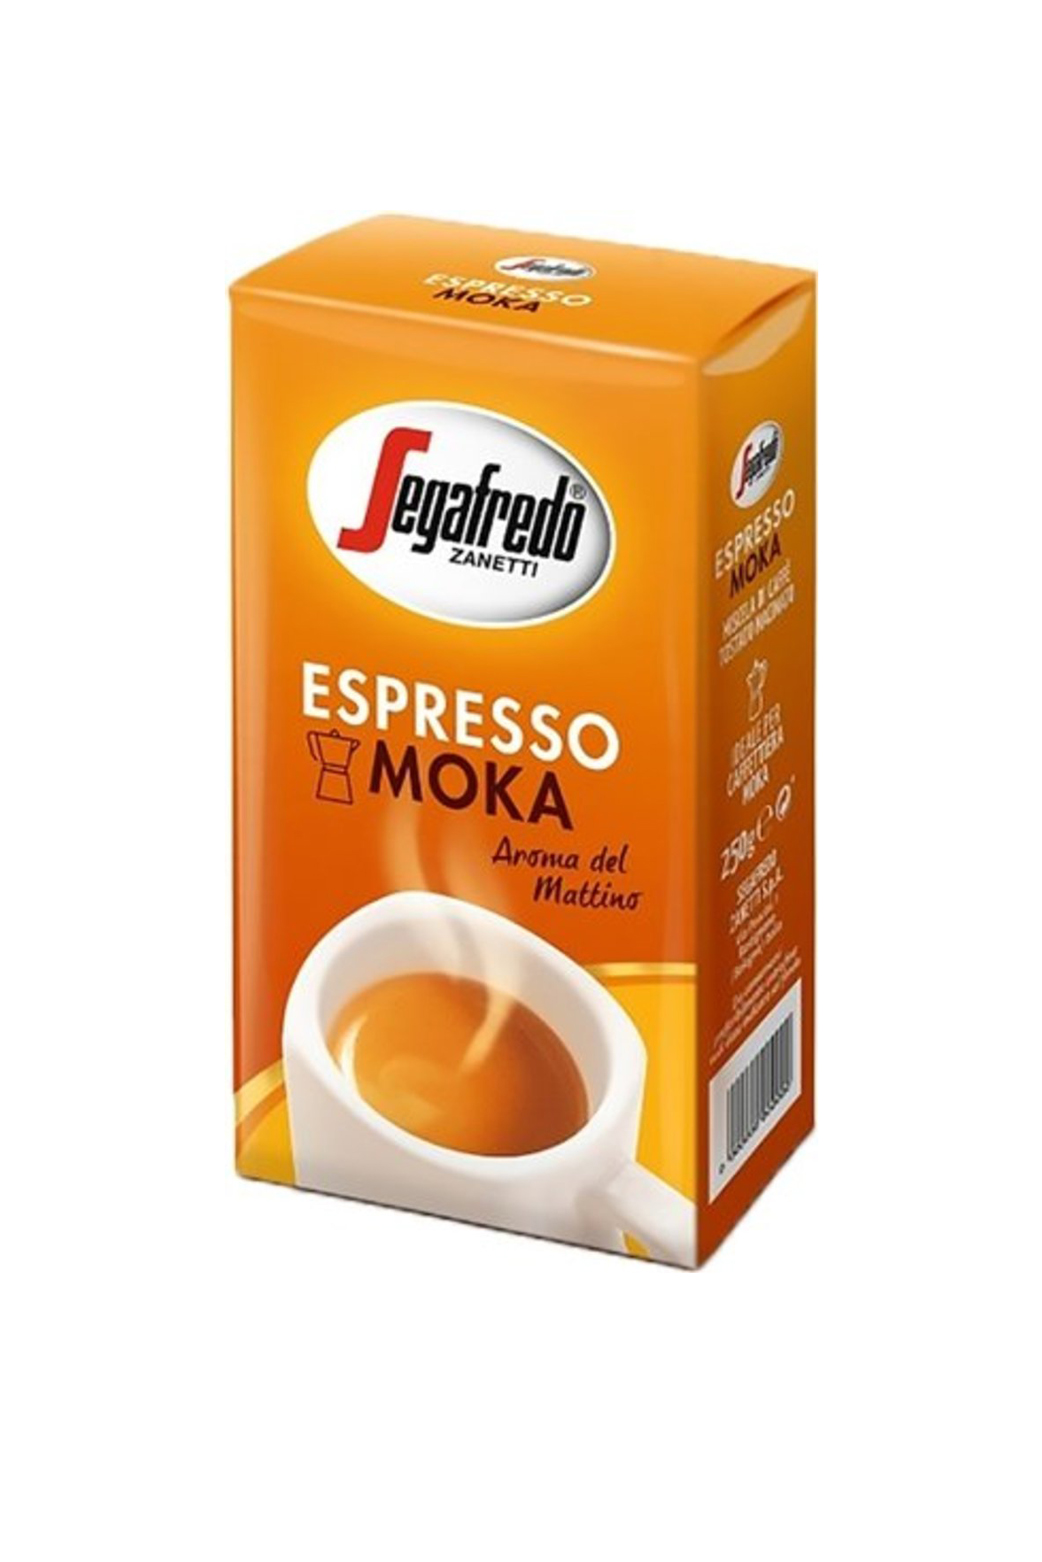 Segafredo Zanetti - Espresso Moka Ground Coffee